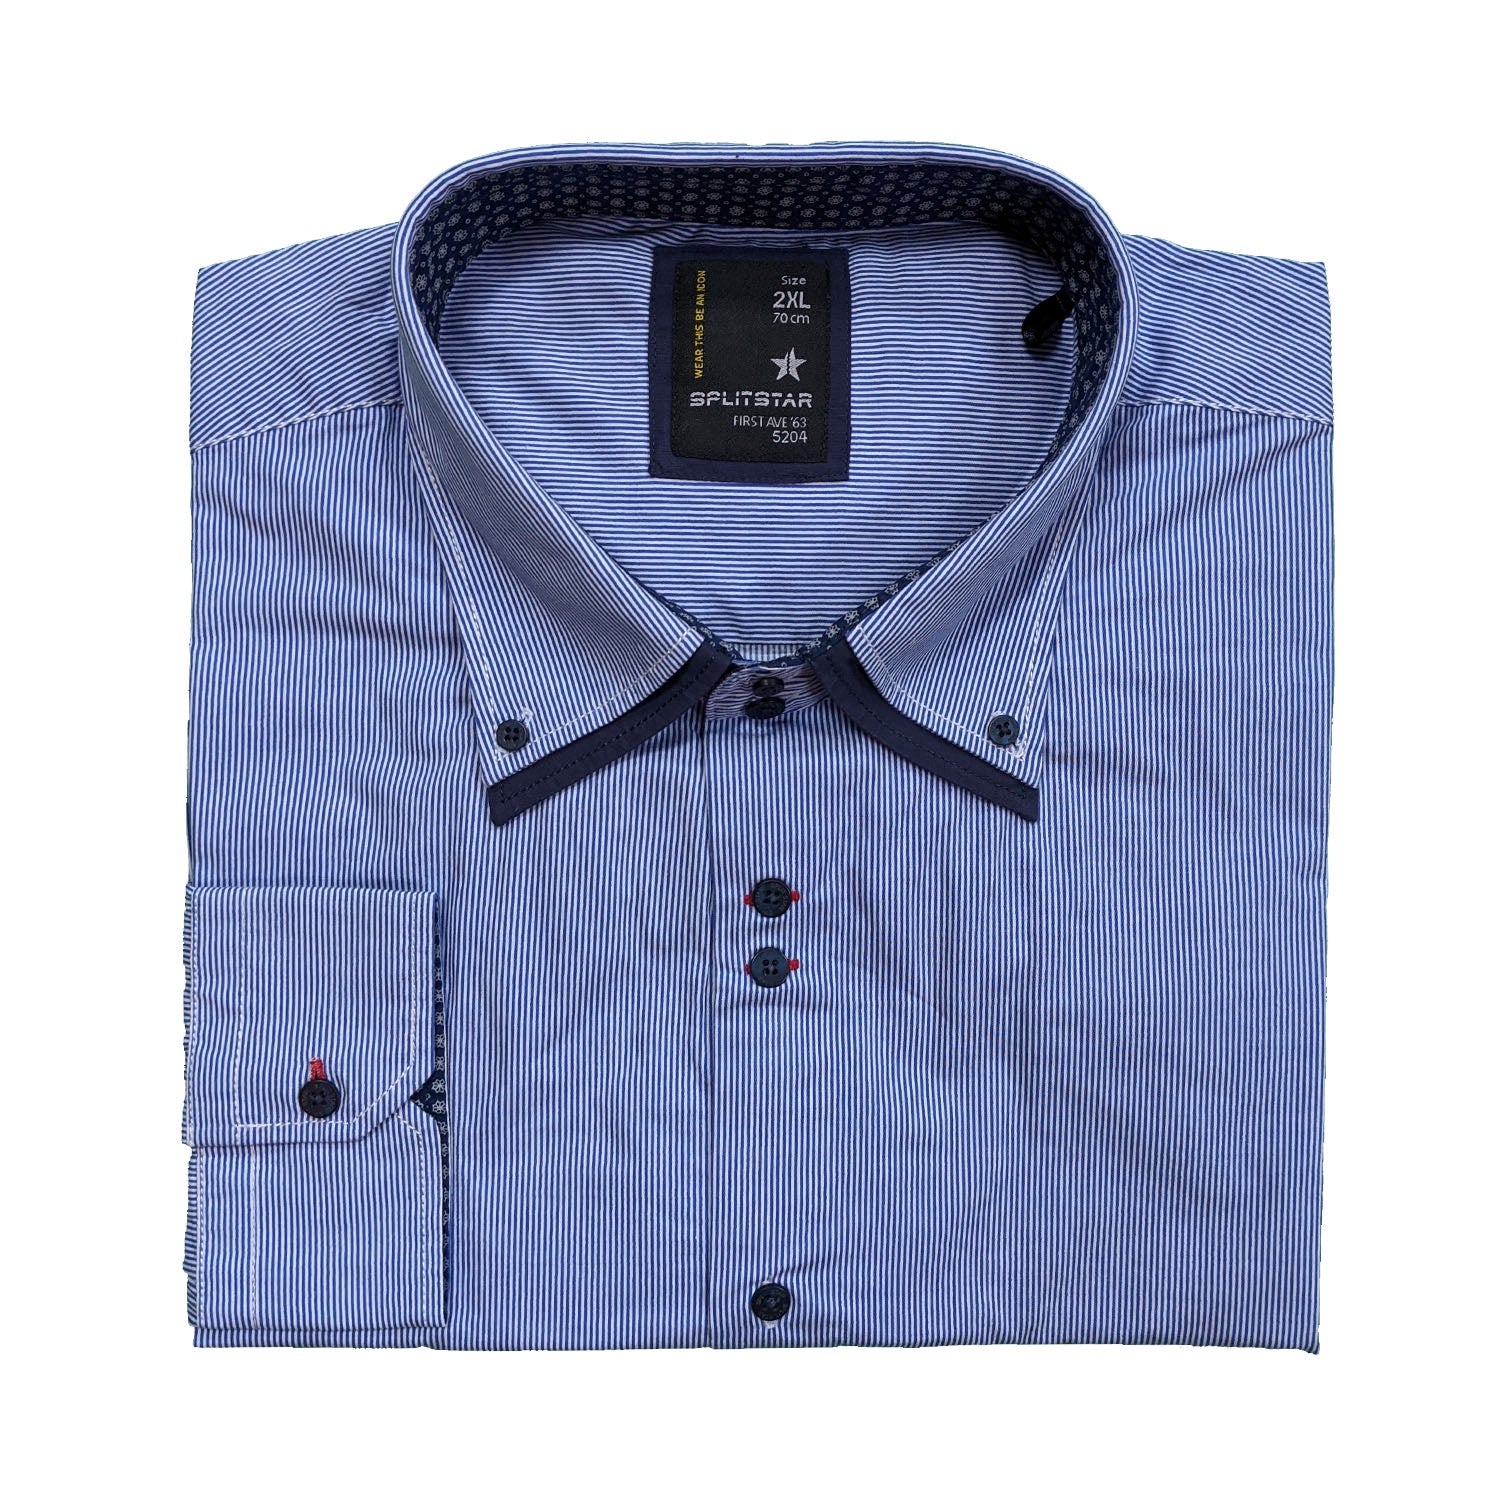 Splitstar L/S Shirt - KS11226 - Republic - Blue / White 1